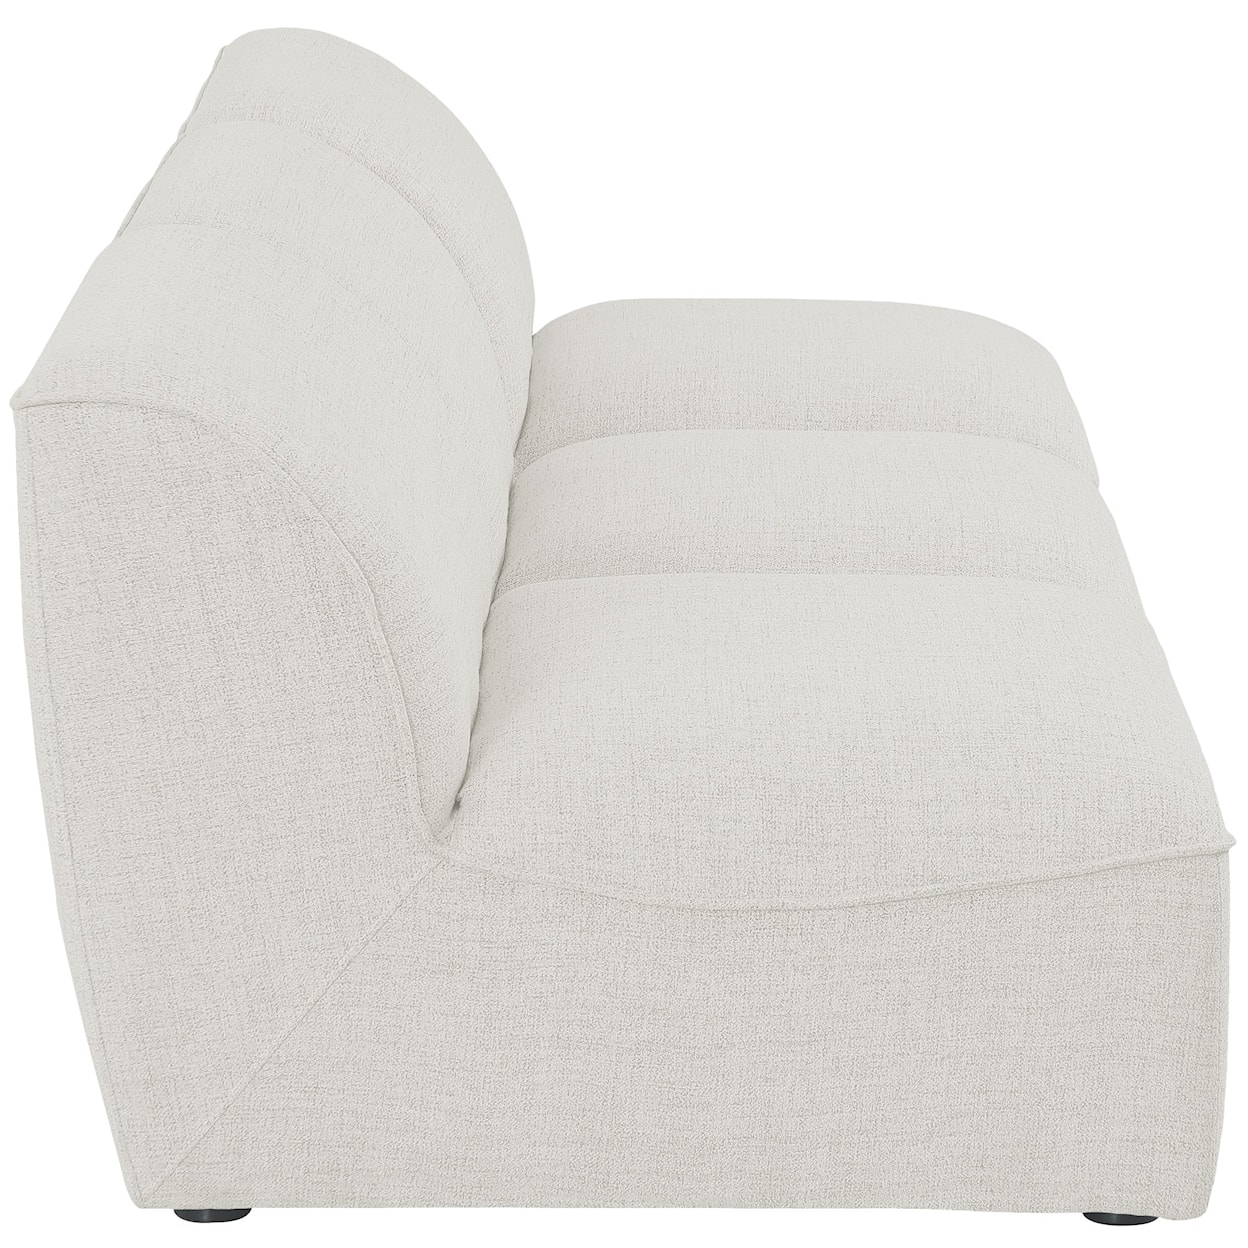 Meridian Furniture Miramar Modular Sofa